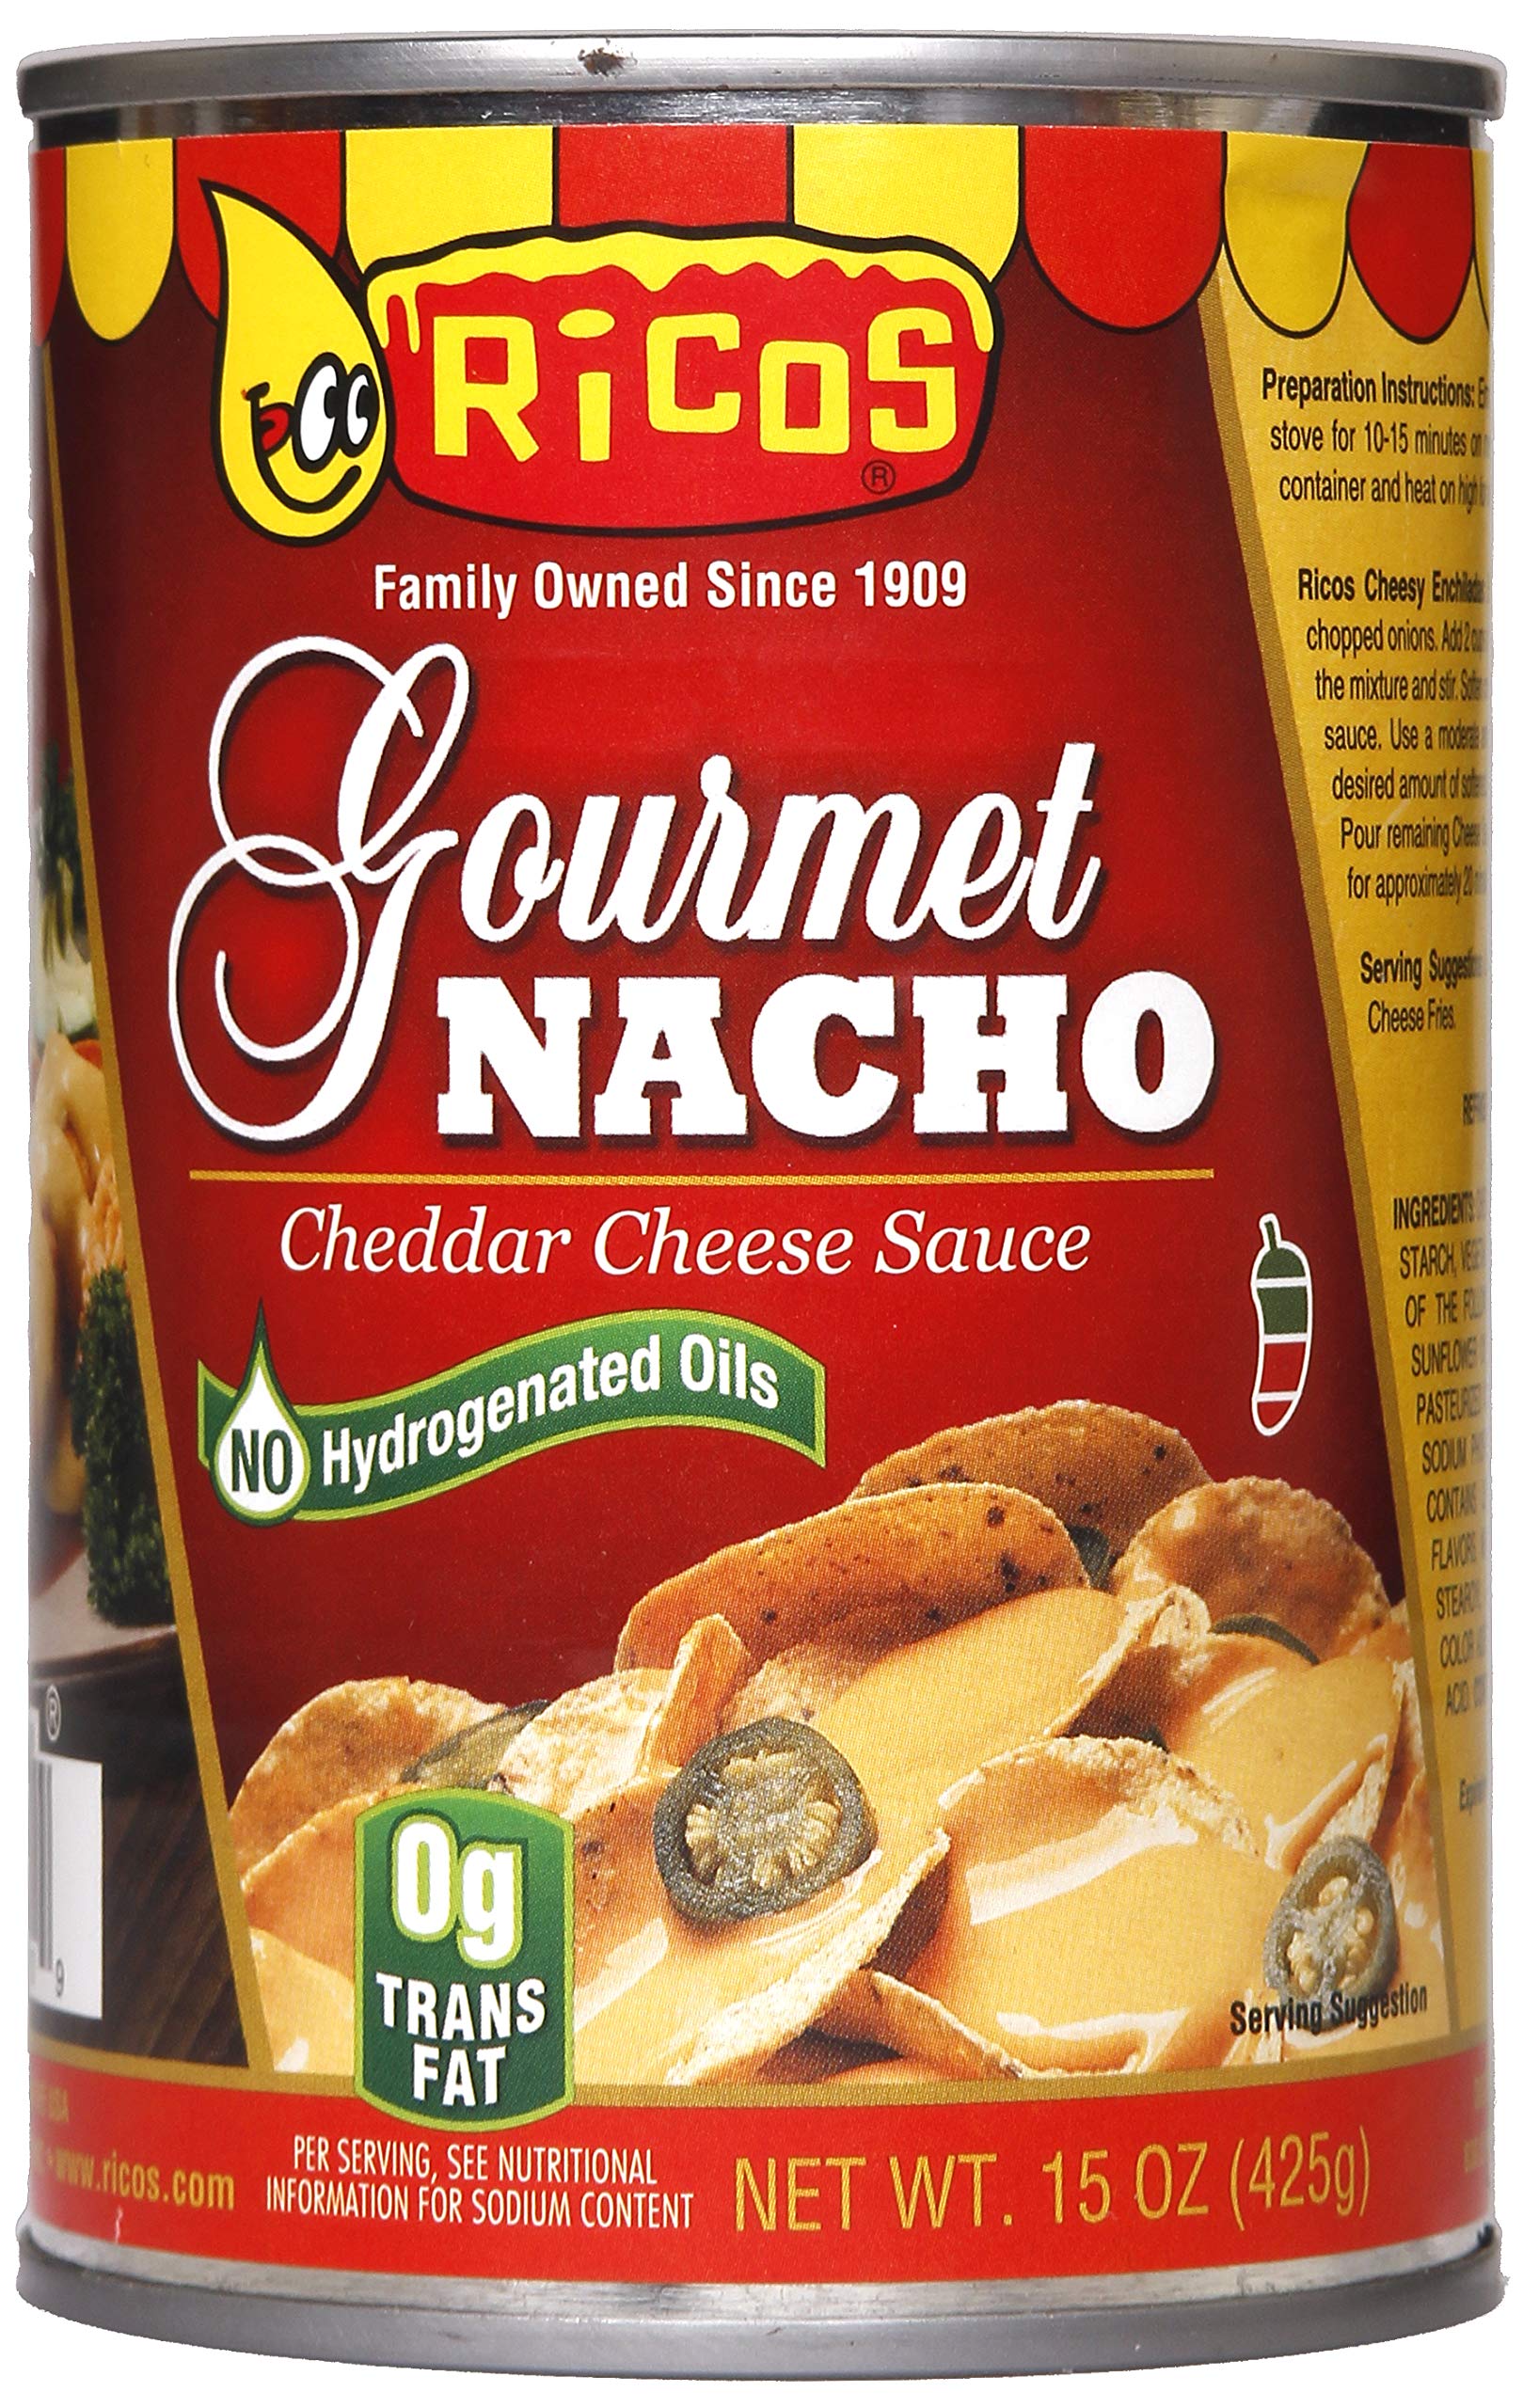 Mua Ricos World Famous Gourmet Nacho Cheese Sauce 15oz Can Trên Amazon Mỹ Chính Hãng 2023 Fado